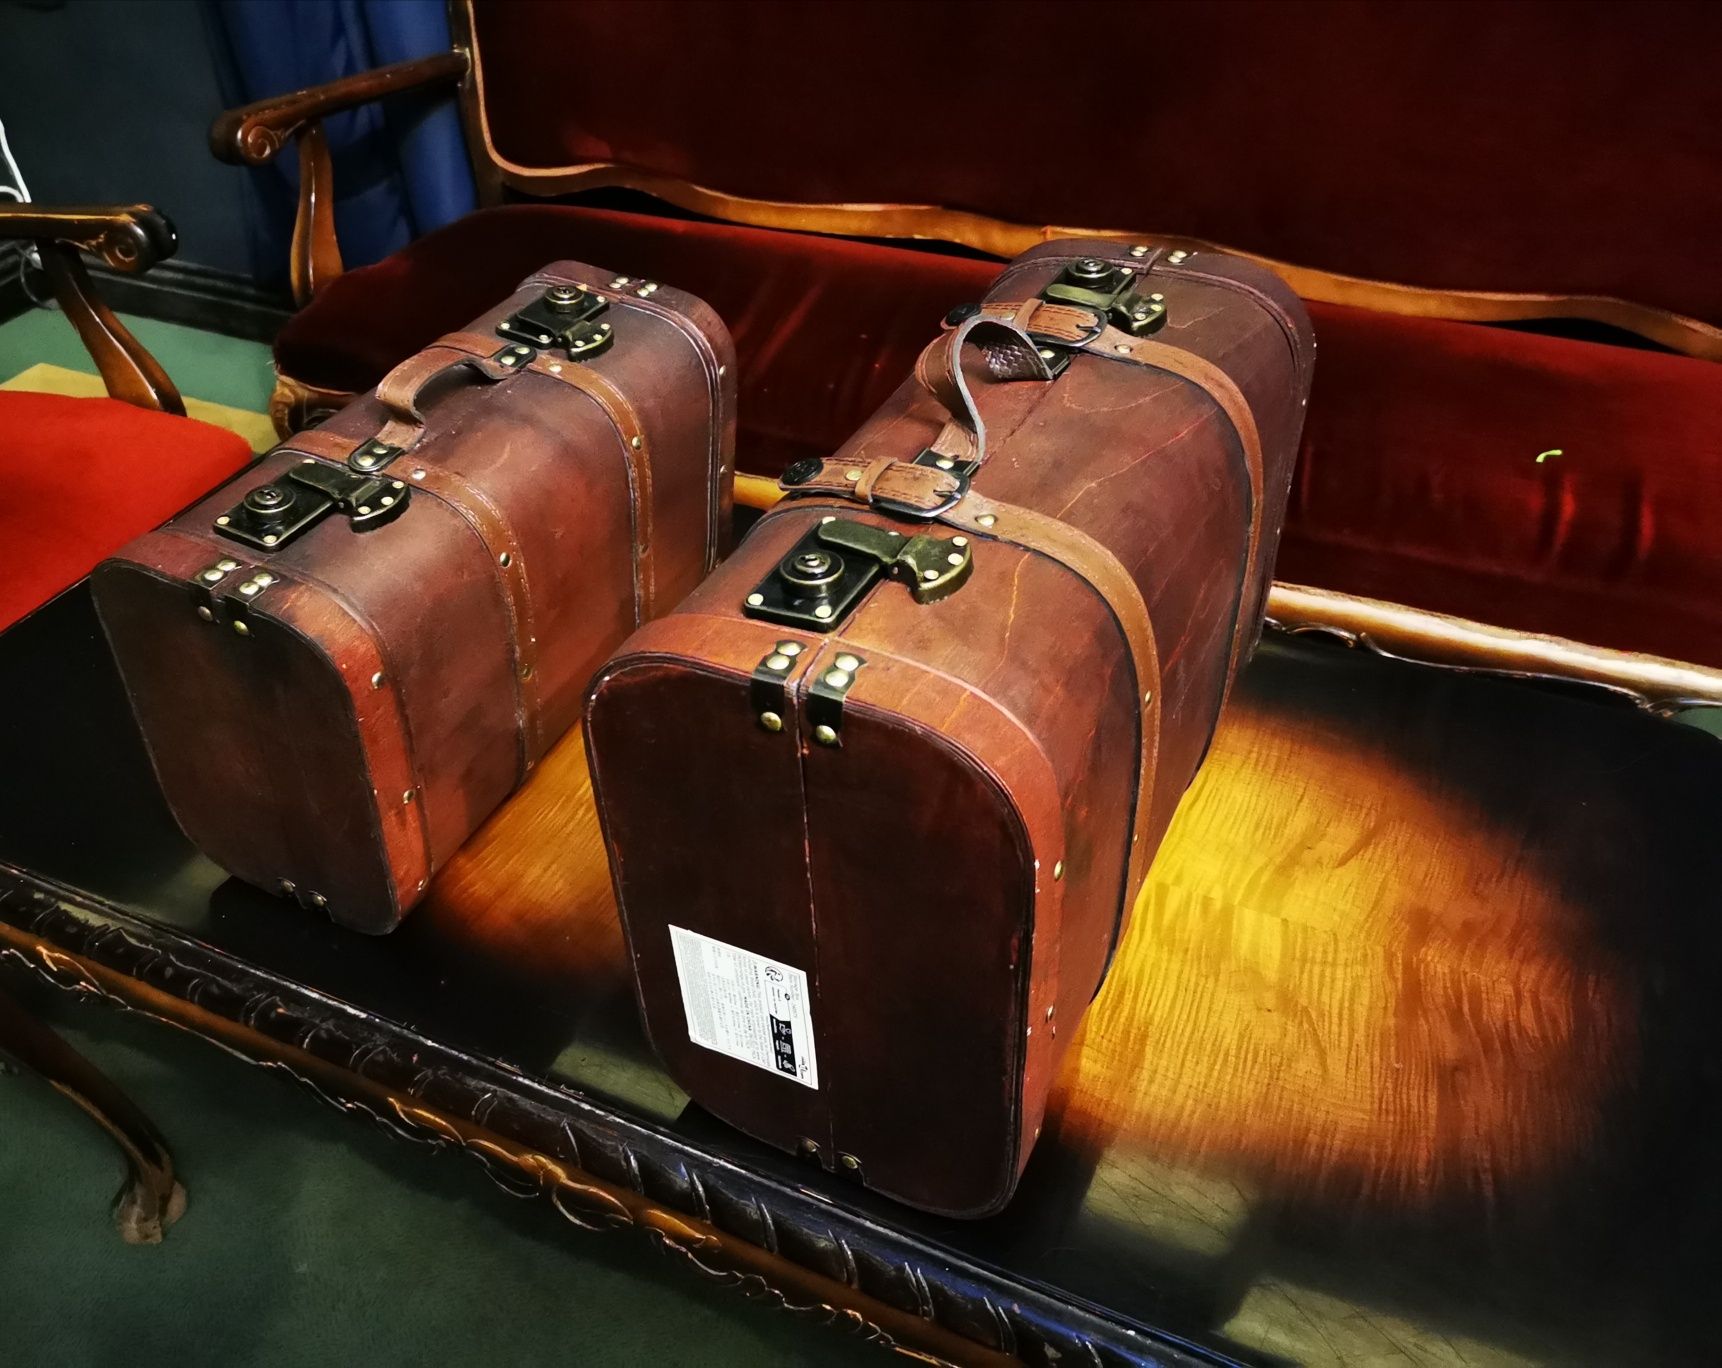 Kuferki kufry walizki vintage stylowe escape room